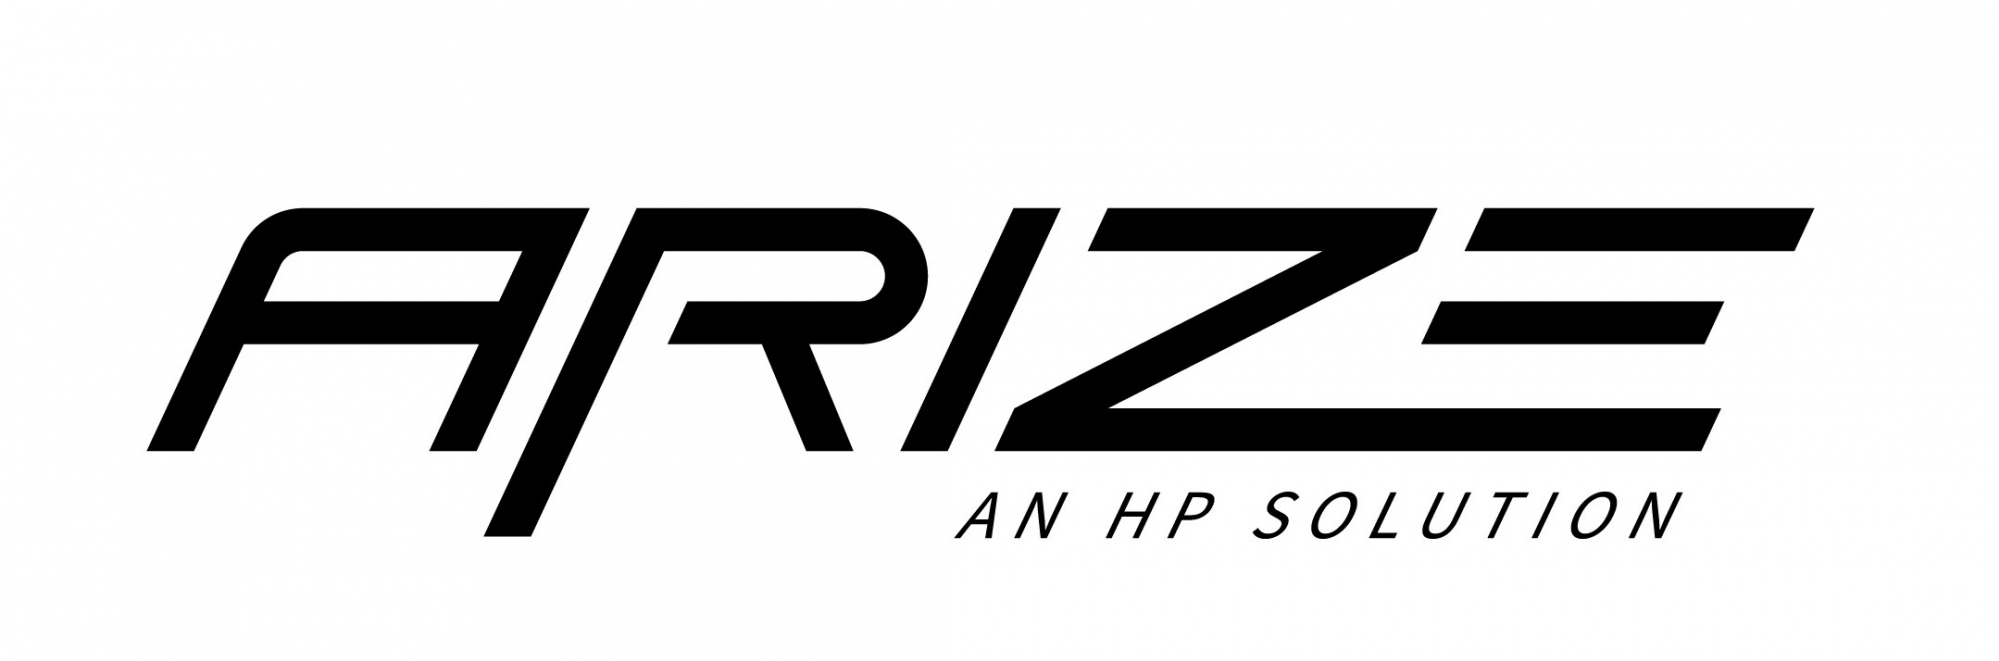 Arize logo